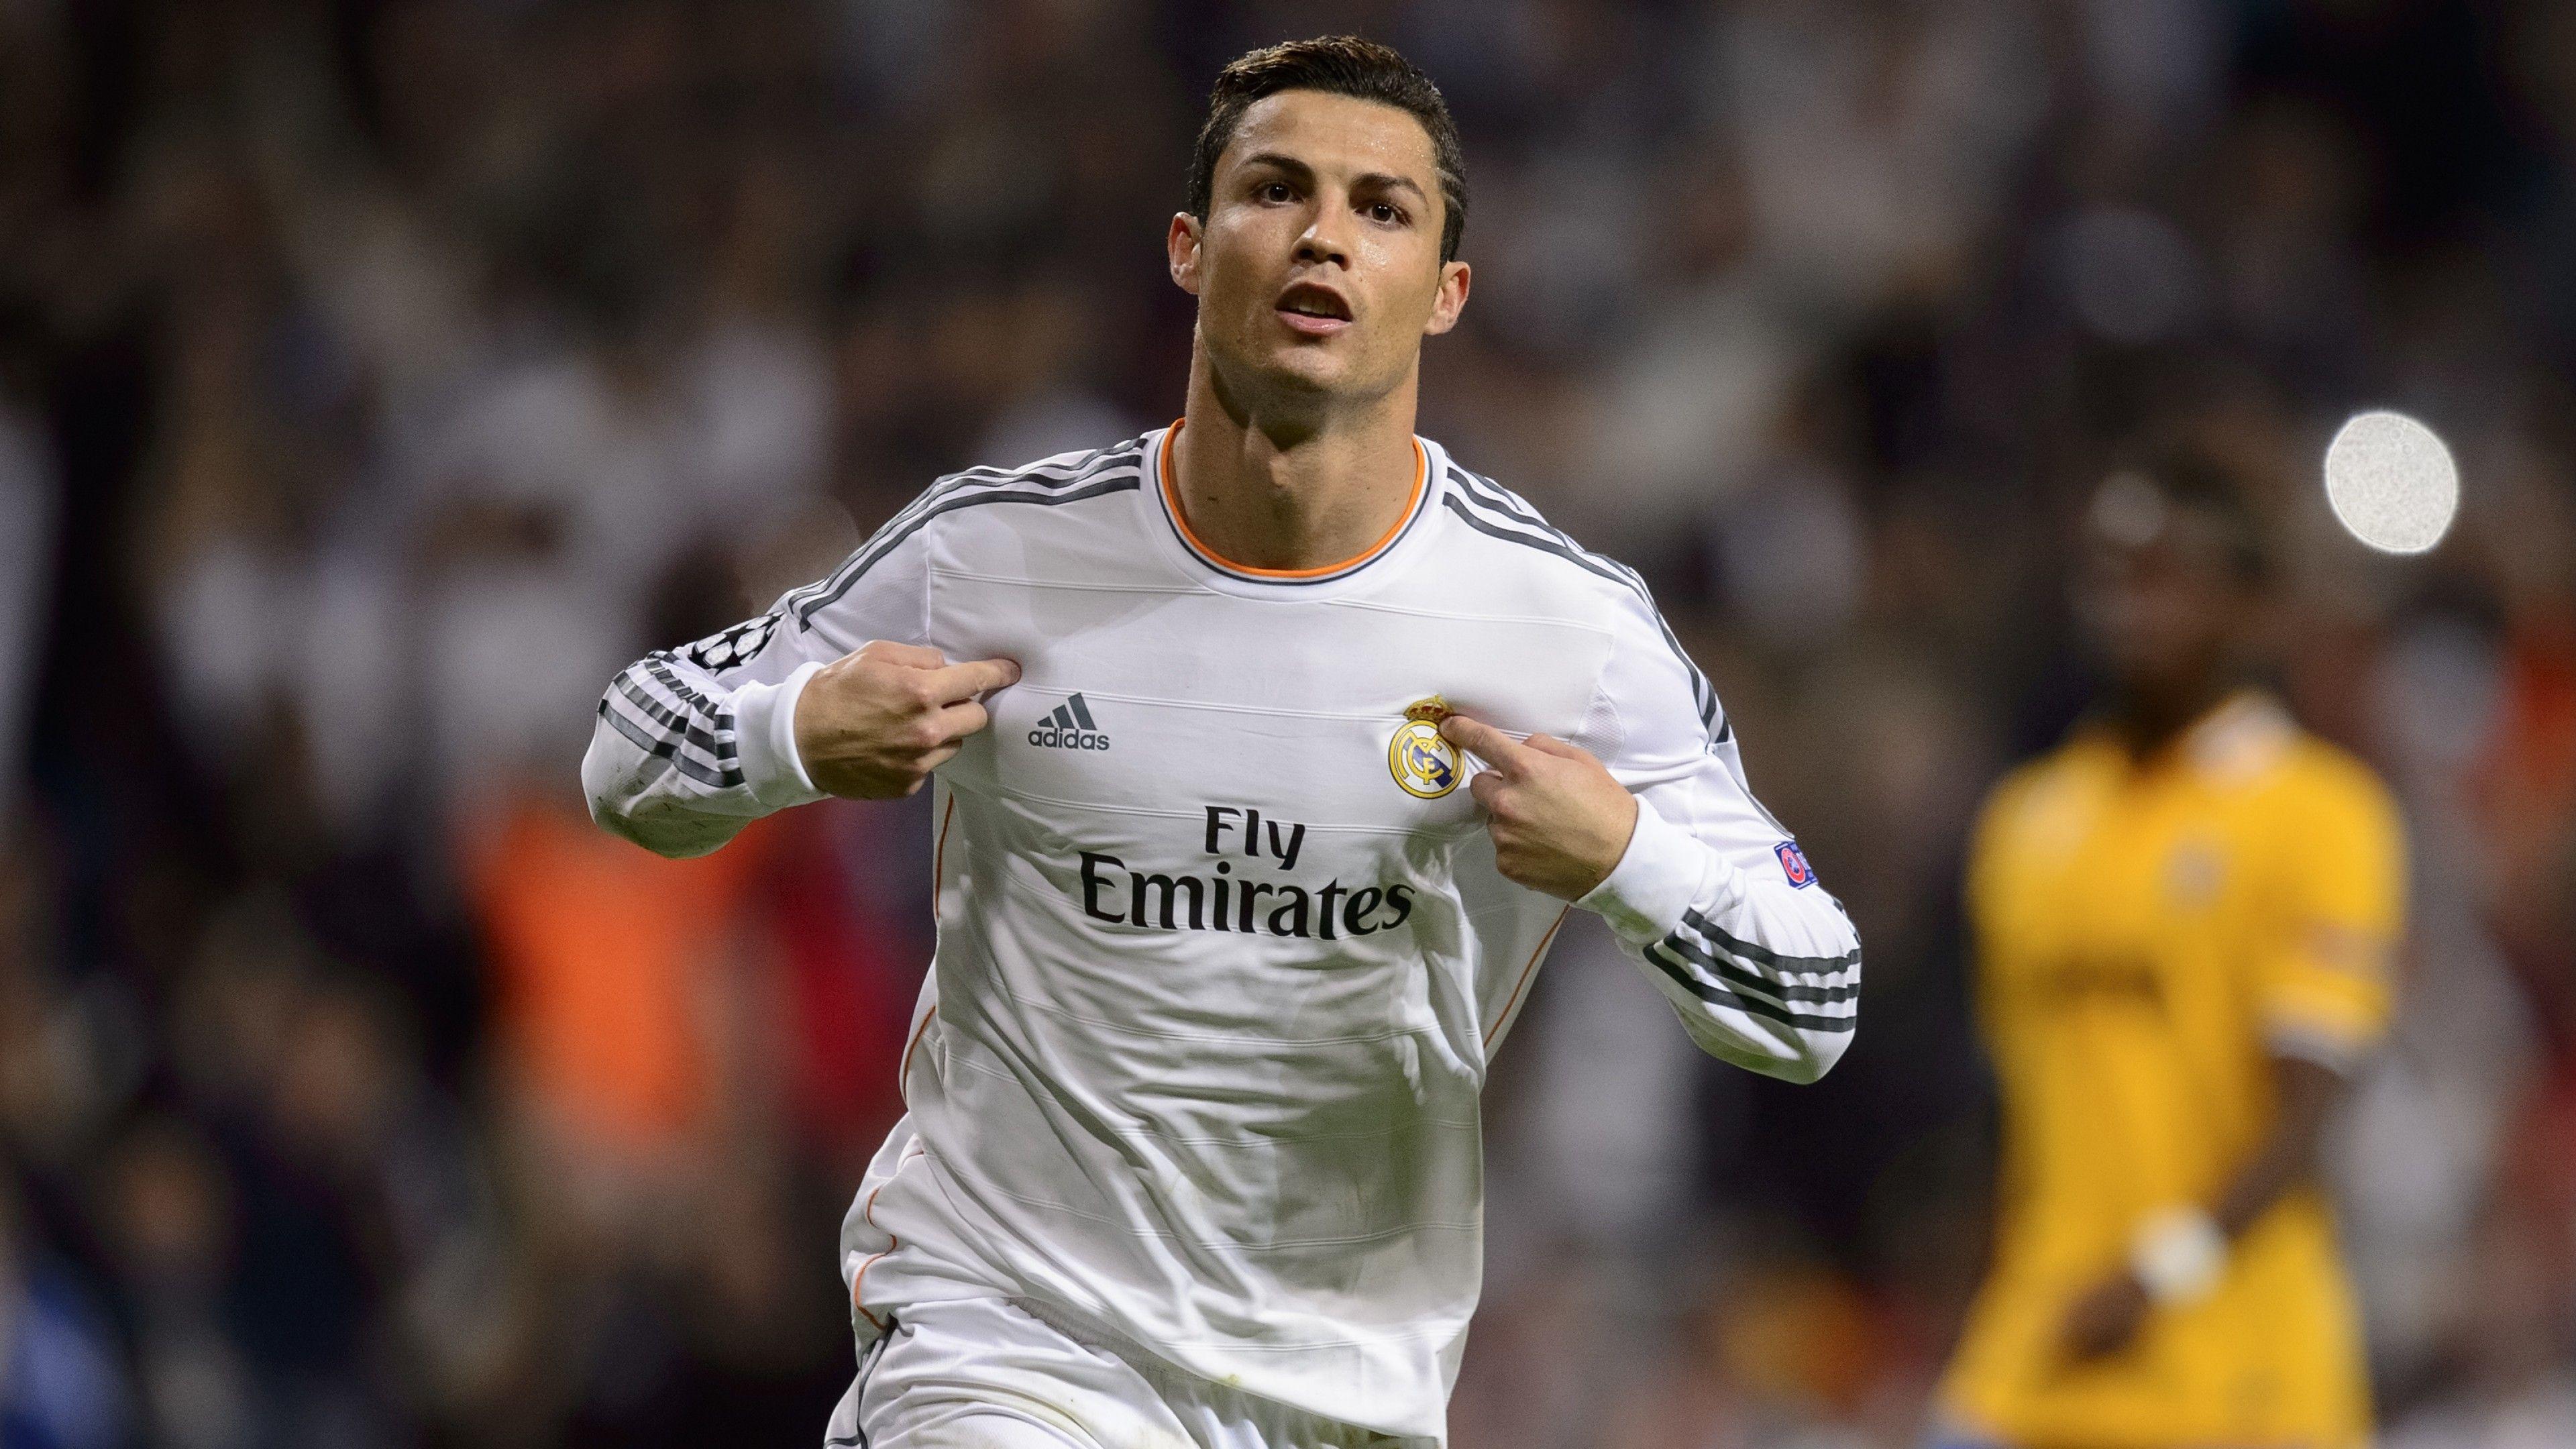 Wallpaper Cristiano Ronaldo, Footballer, Best player, Soccer, HD